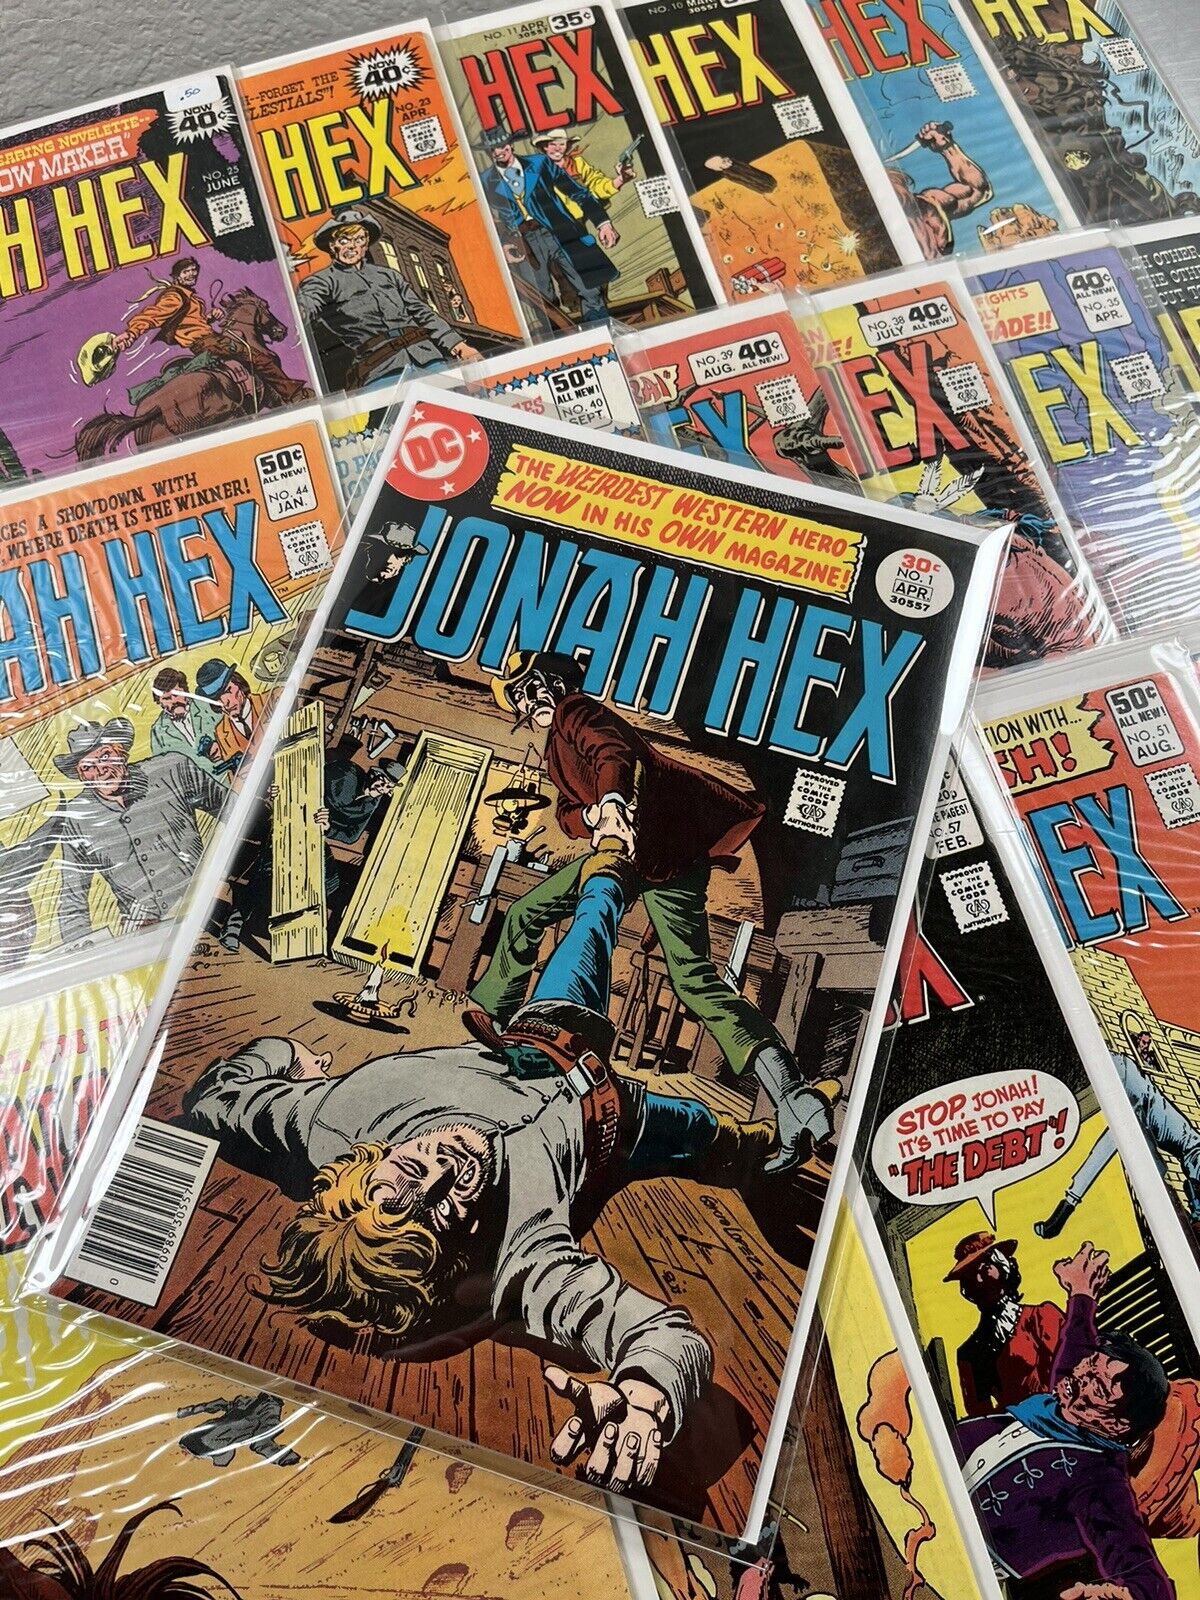 DC COMICS JONAH HEX LOT OF 20 - INCLUDES #1 & #7 KEYS